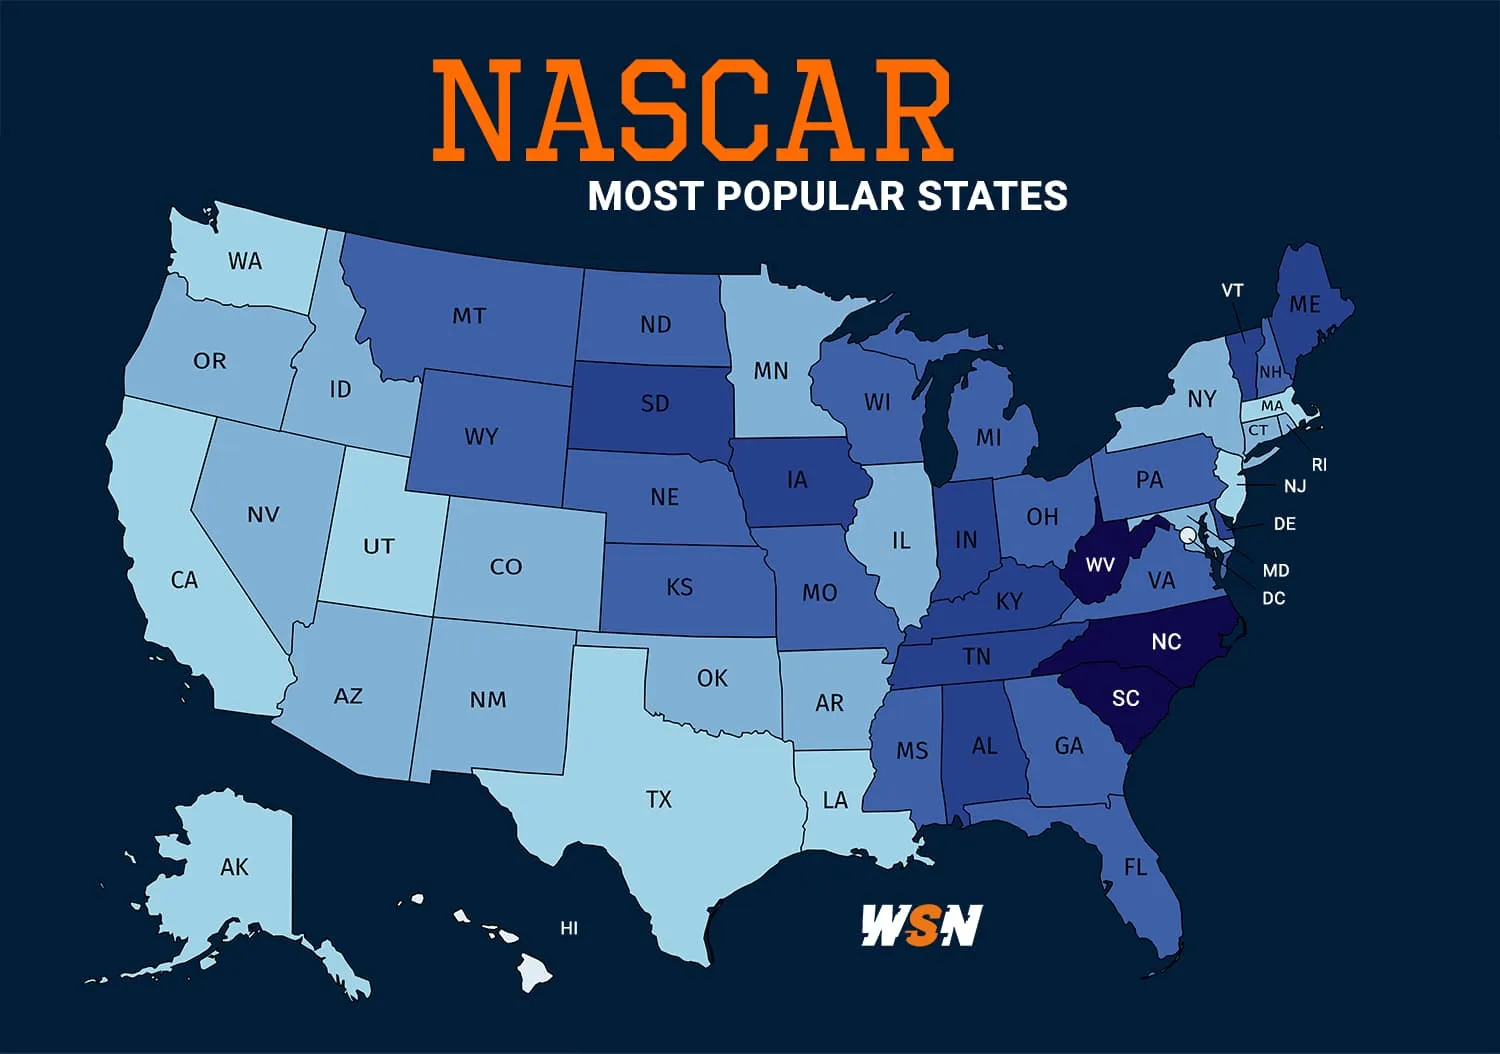 NASCAR most popular states